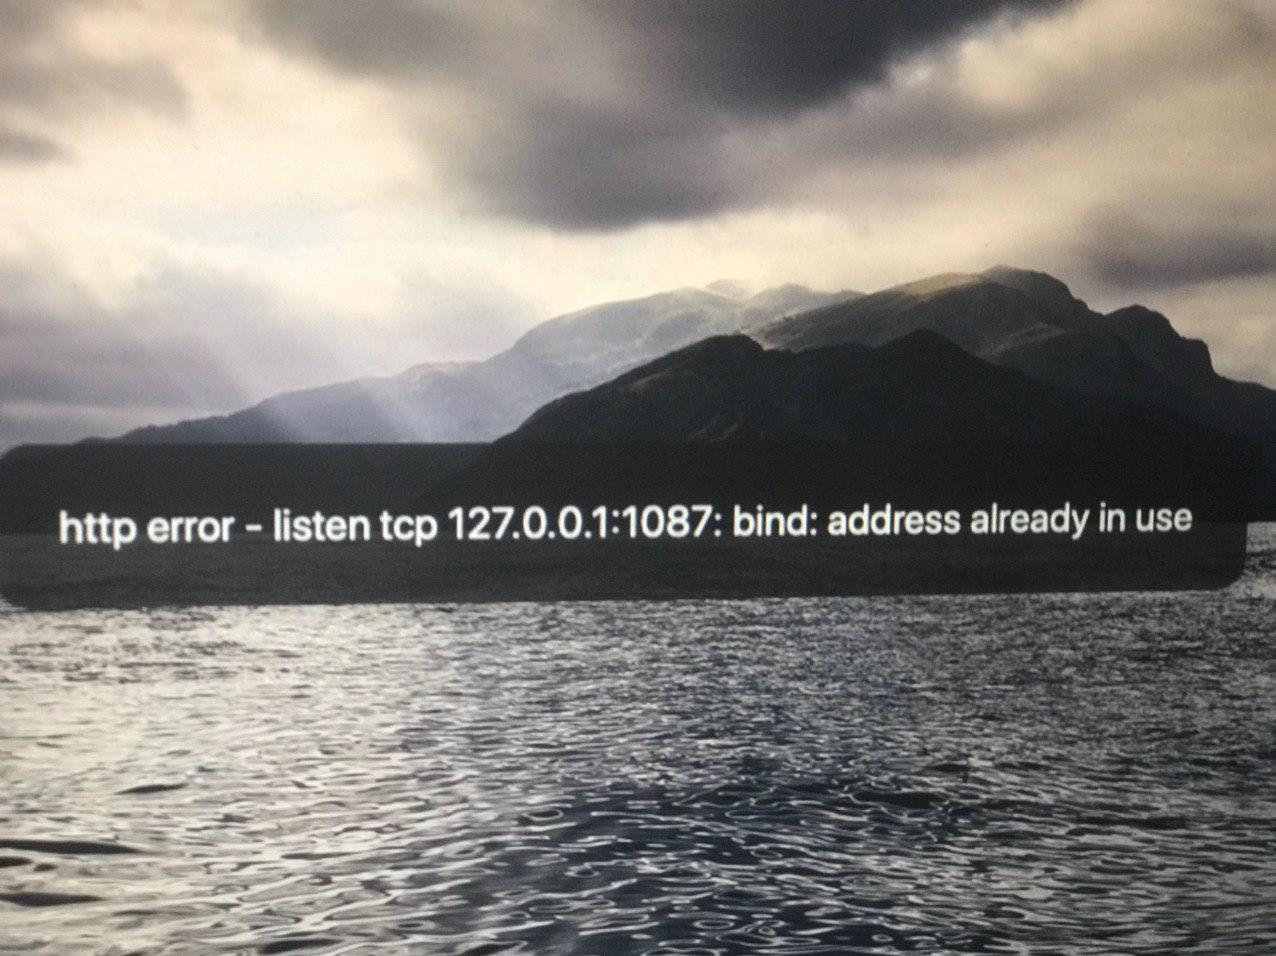 MAC OS客户端 V2rayU出现http error-listen tcp 127.0.0.1:1087:bind:address aliready in use怎么办？